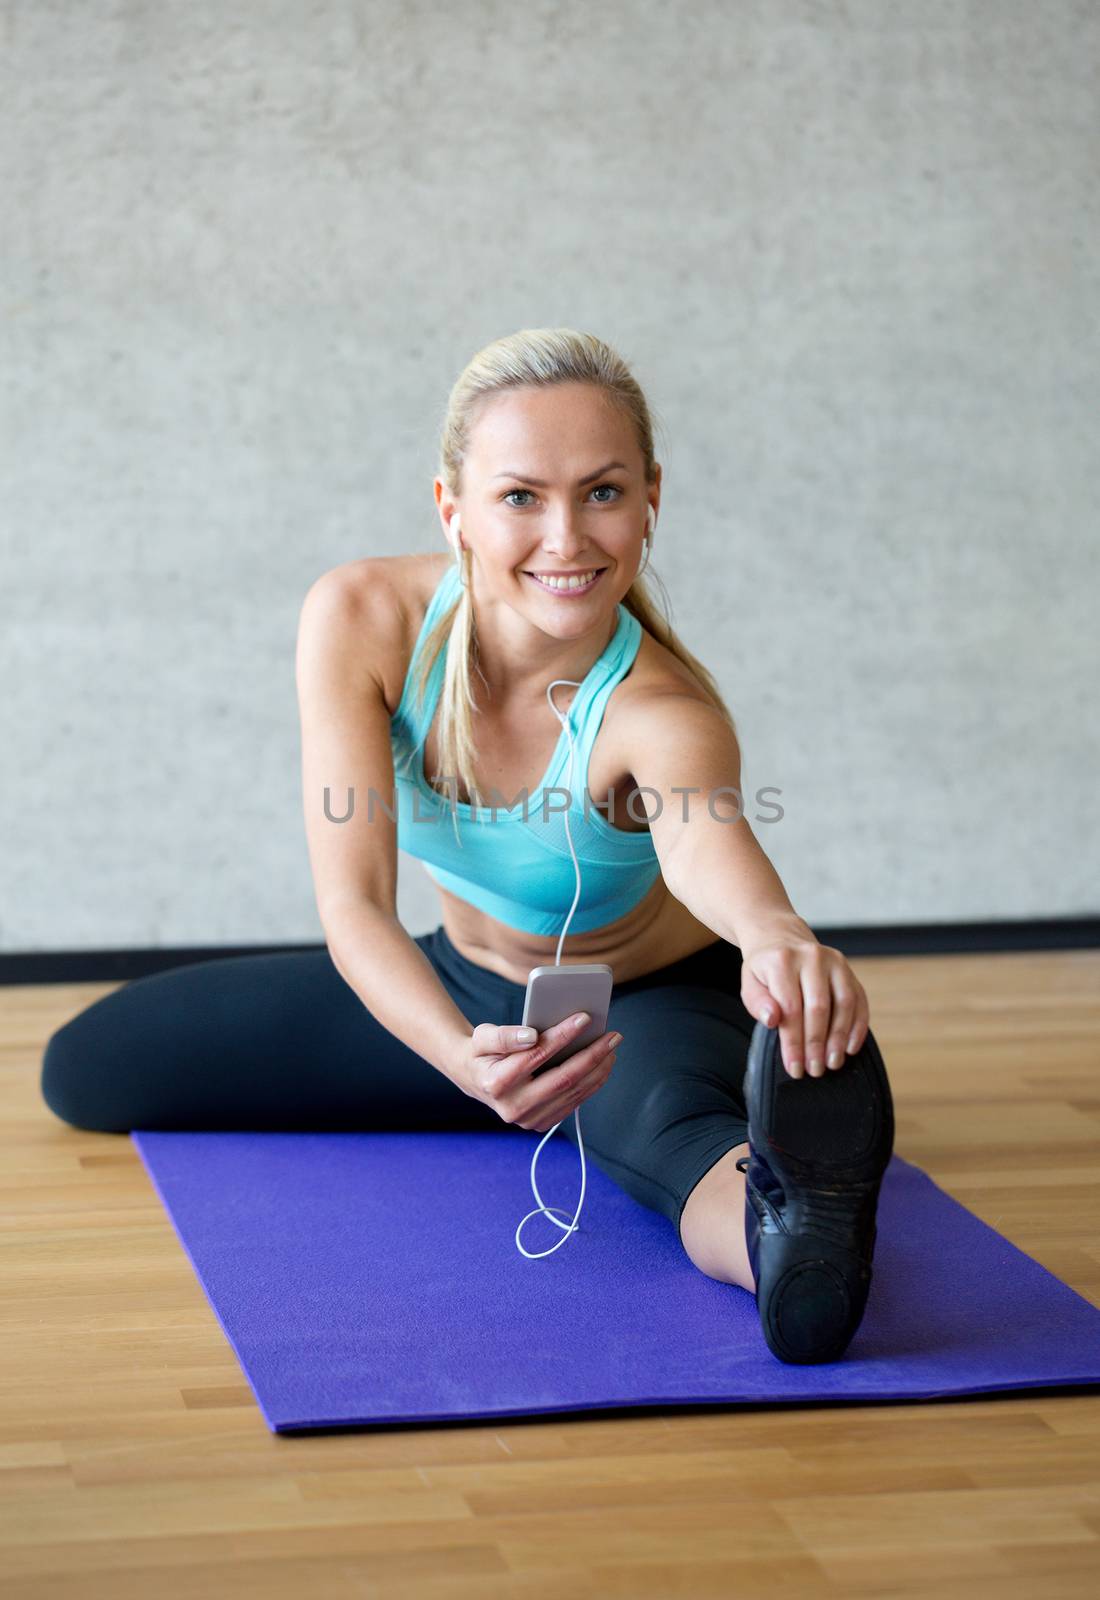 smiling woman stretching leg on mat in gym by dolgachov